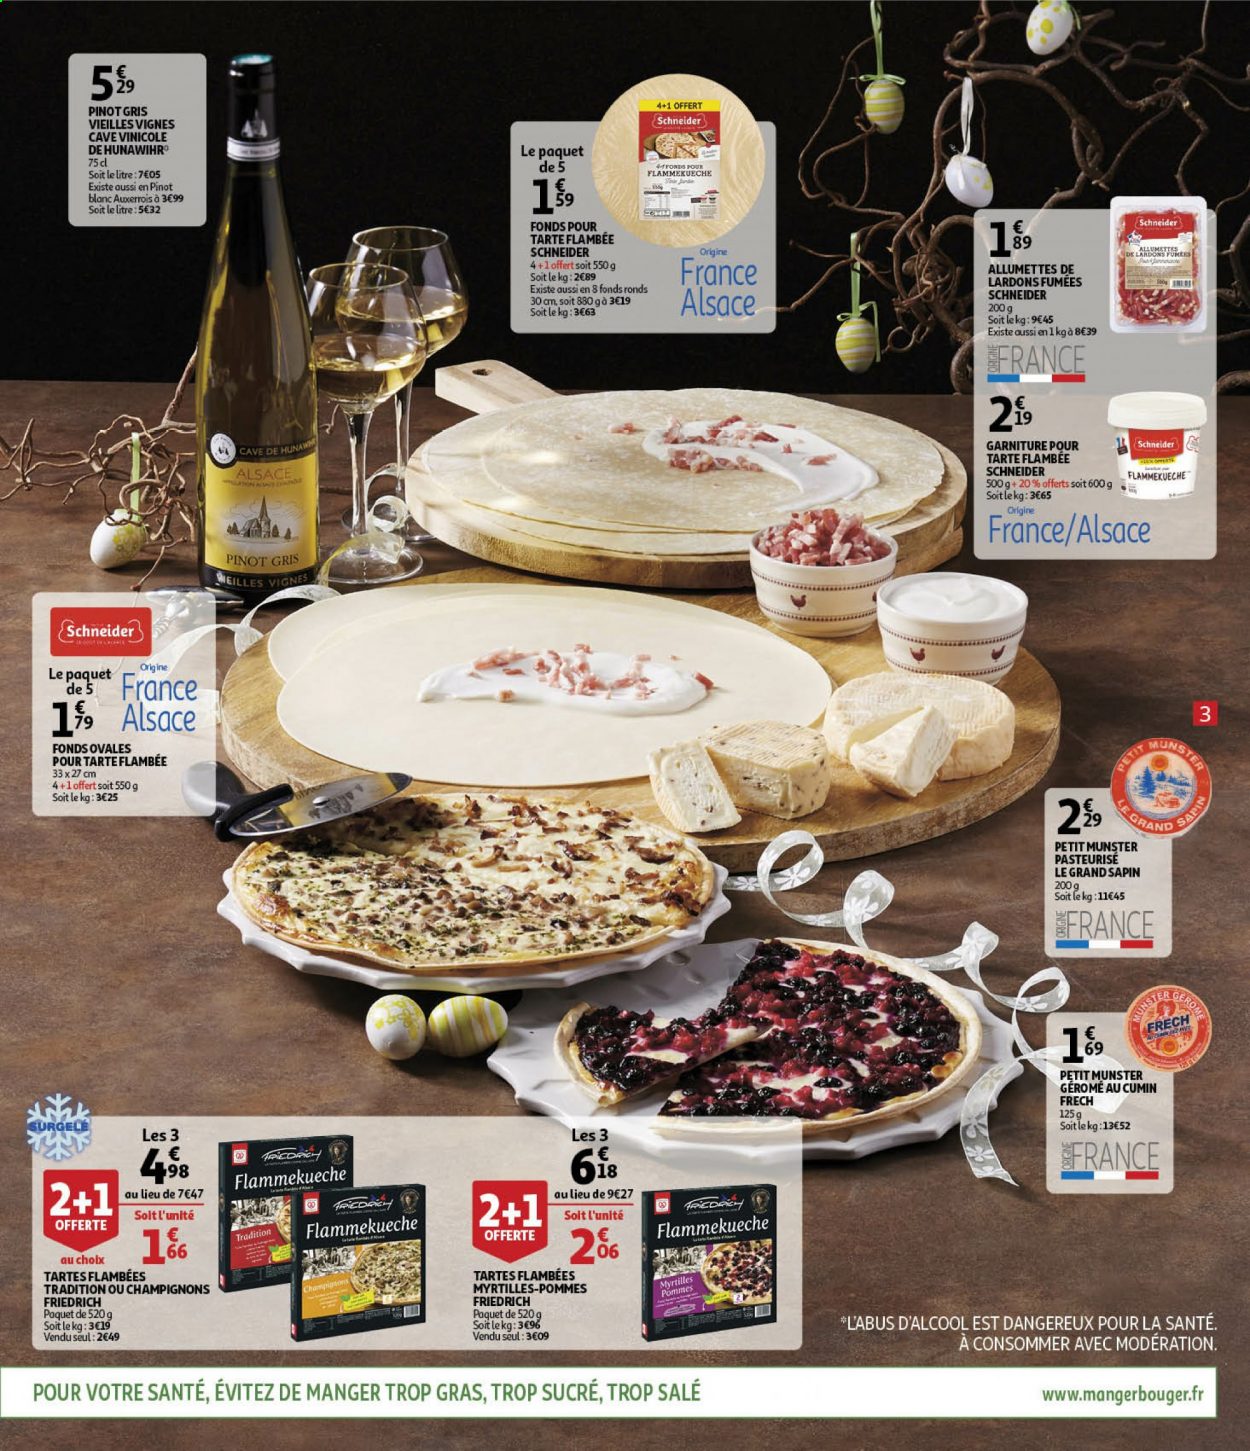 Catalogue Auchan - 24.03.2021 - 03.04.2021. 